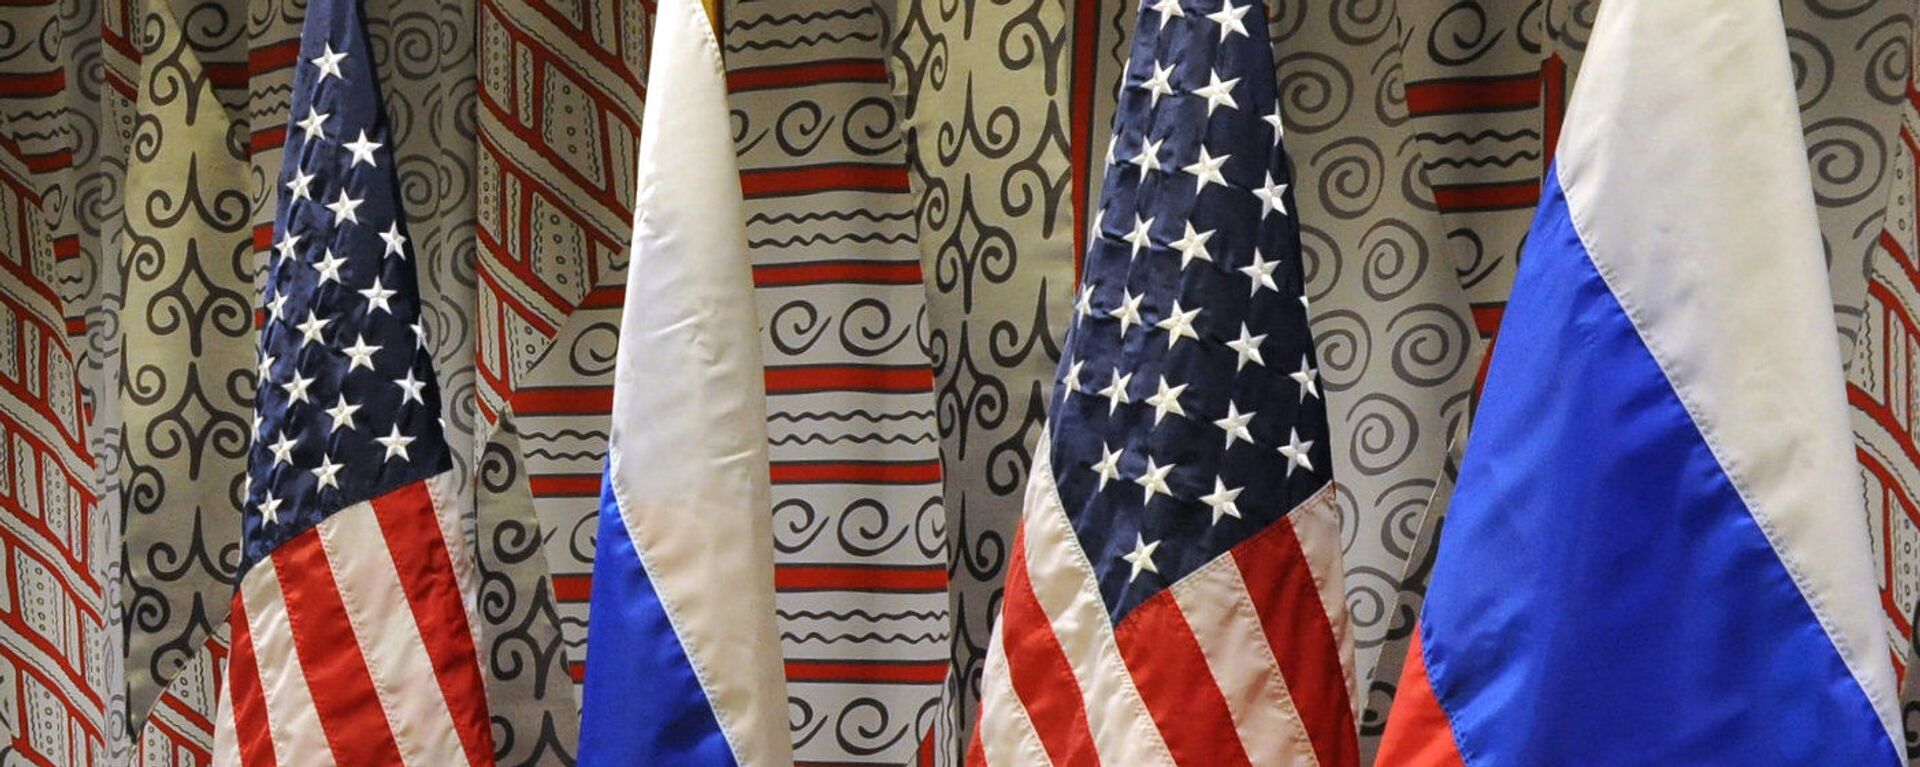 Флаги России и США - Sputnik Latvija, 1920, 28.05.2021